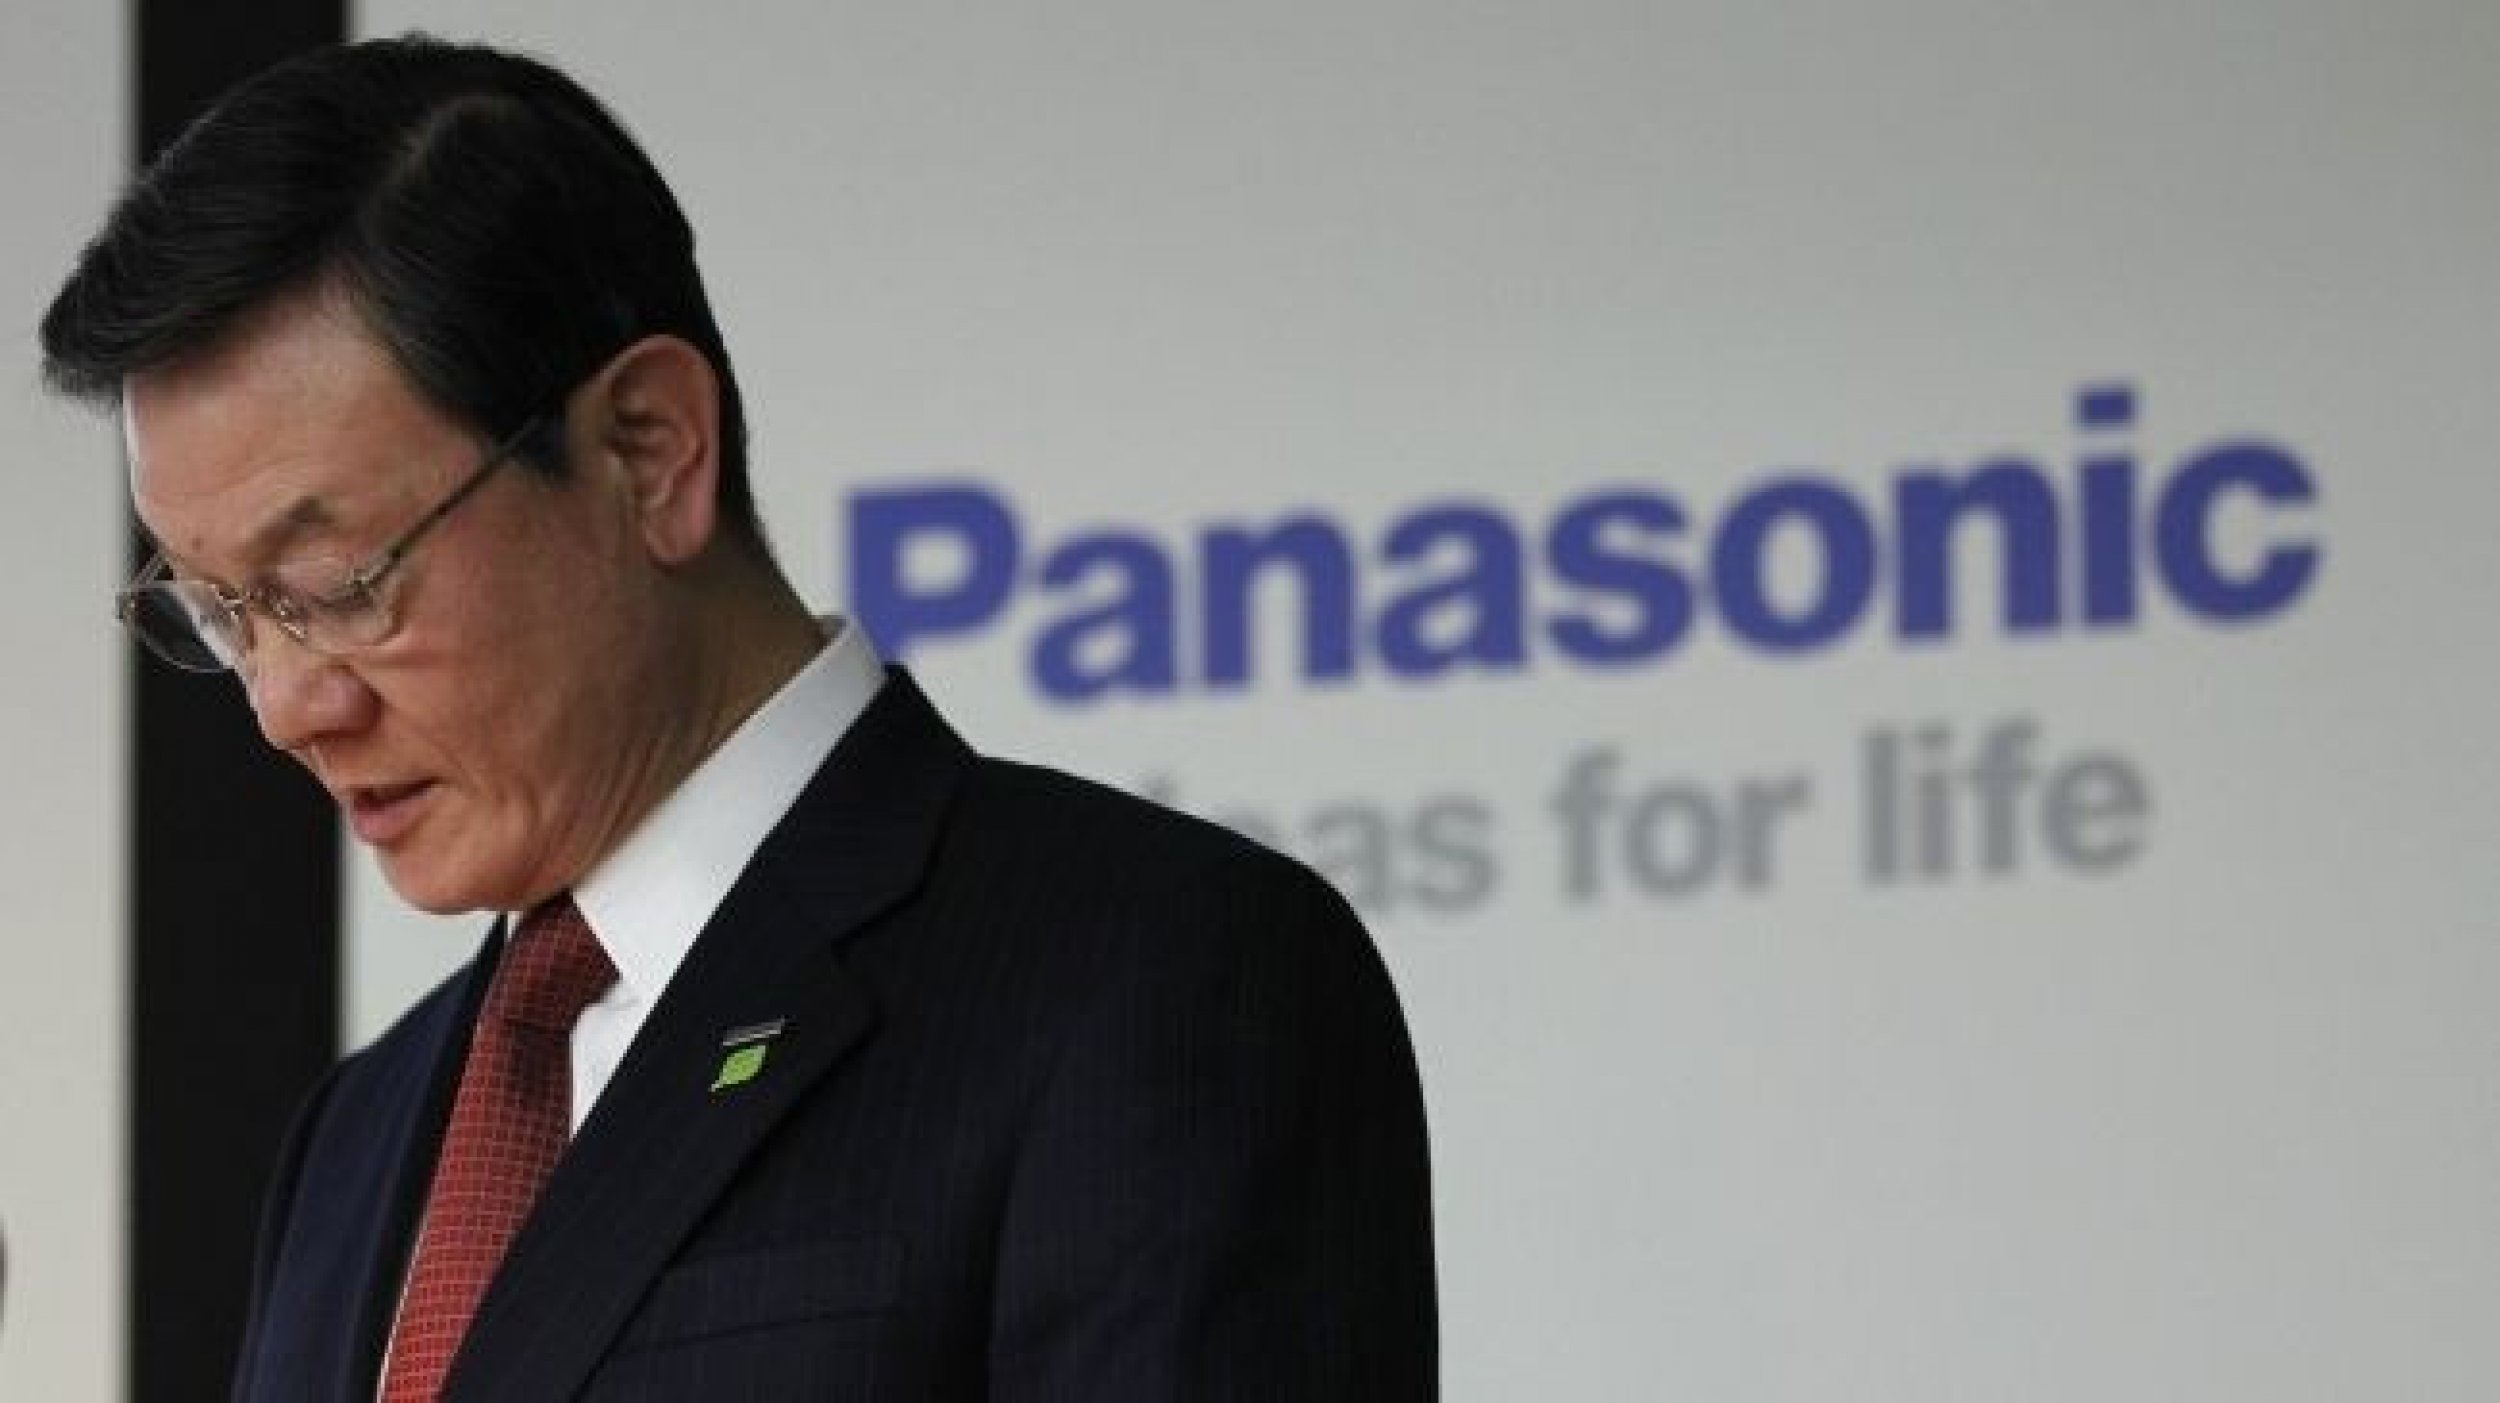 Panasonics Record Loss of over 10 billion Dollars